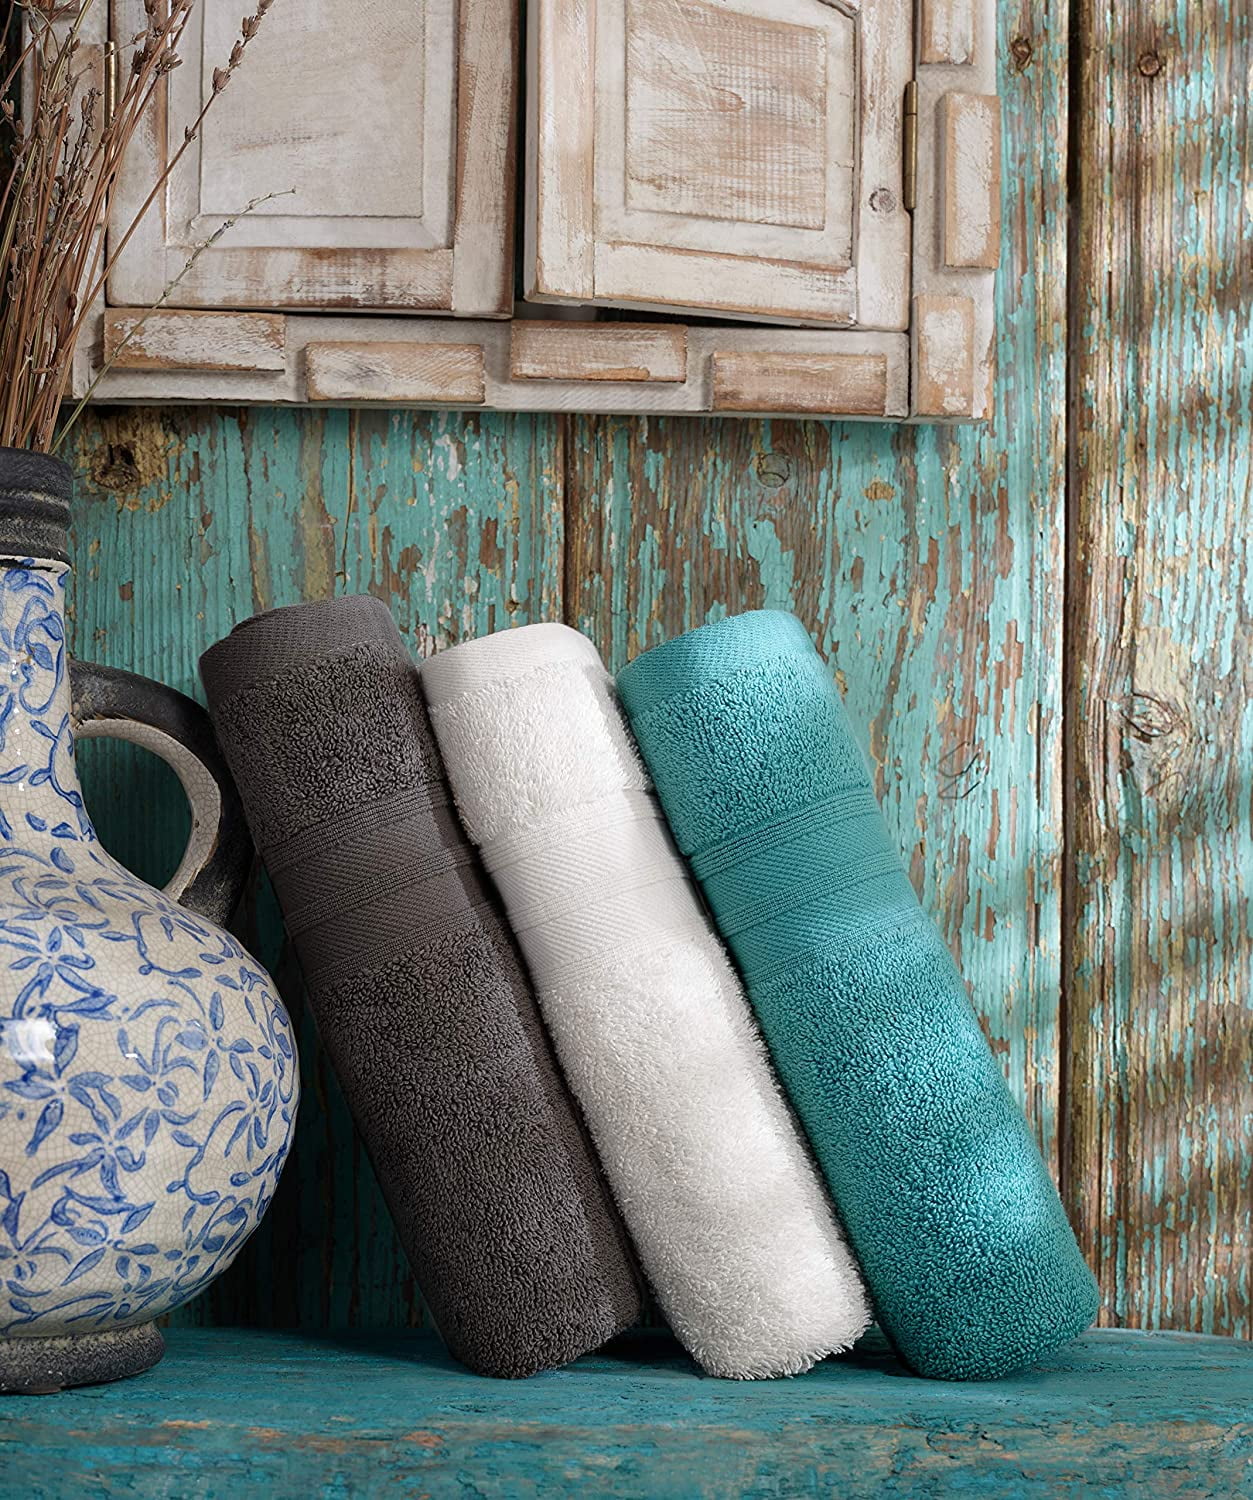 Asiatique Linen - Luxury Medium Gray Bath Towels - Pack of 6 Towels for  Bathroom 24 x 48 inch - 100% Cotton Bathroom Towels 